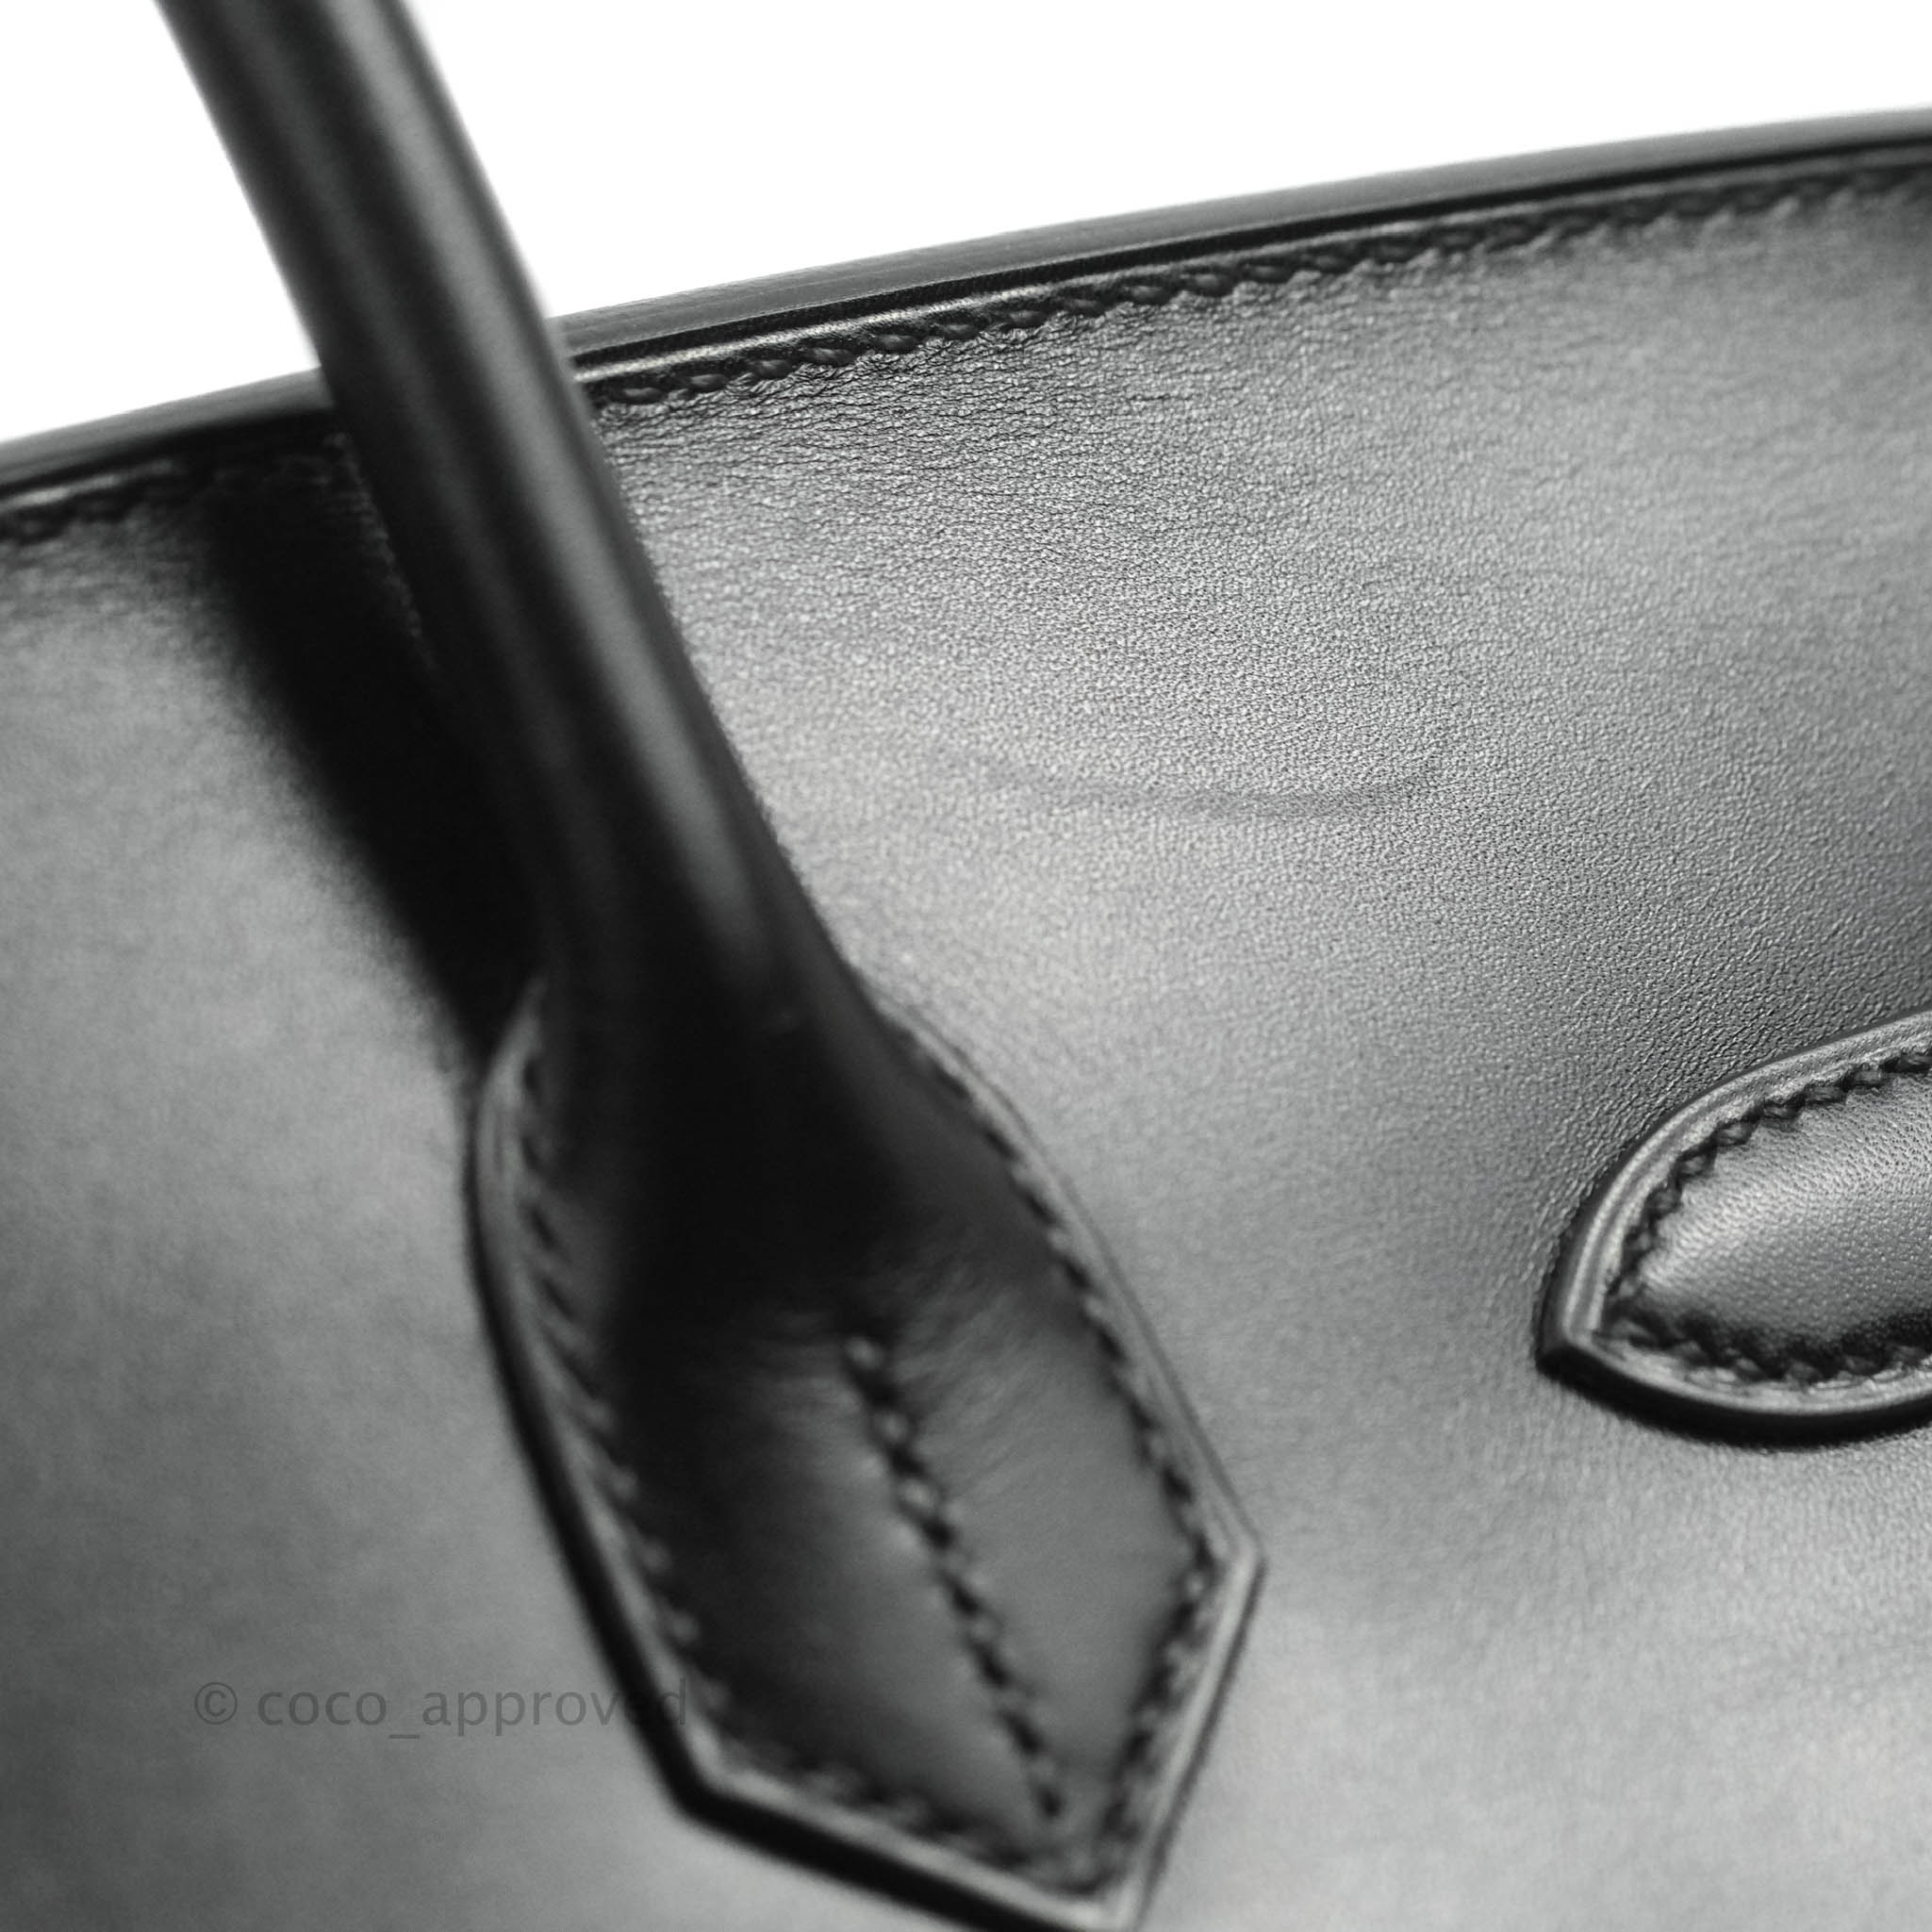 🖤 Hermès 30cm Birkin Black Box Calf Leather Gold Hardware 2020